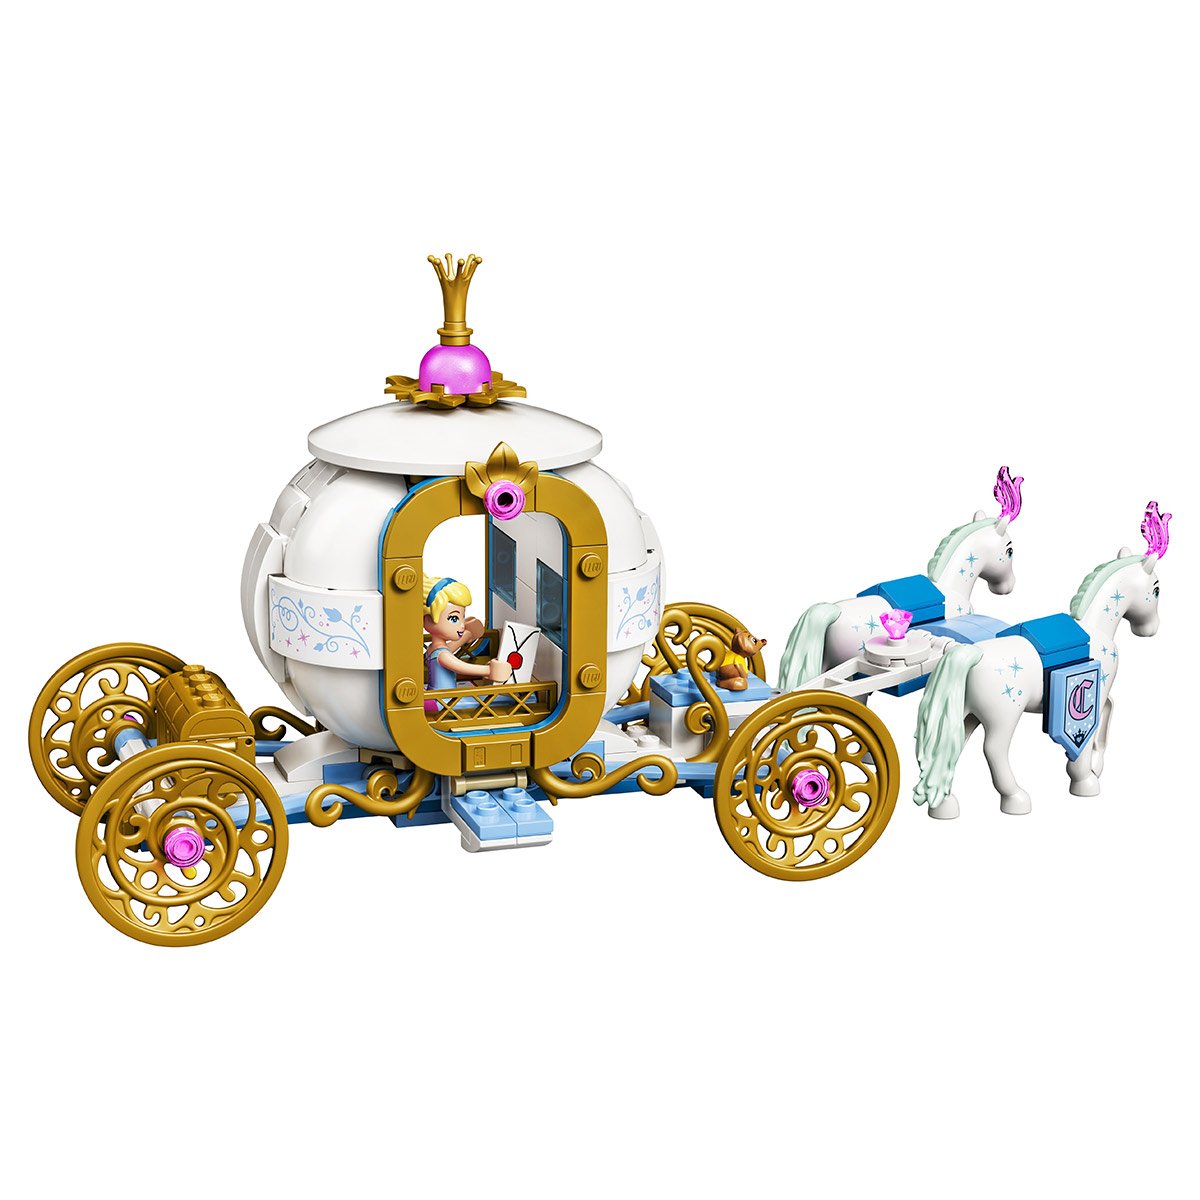 Le carrosse de cendrillon Disney Princess : Le jeu